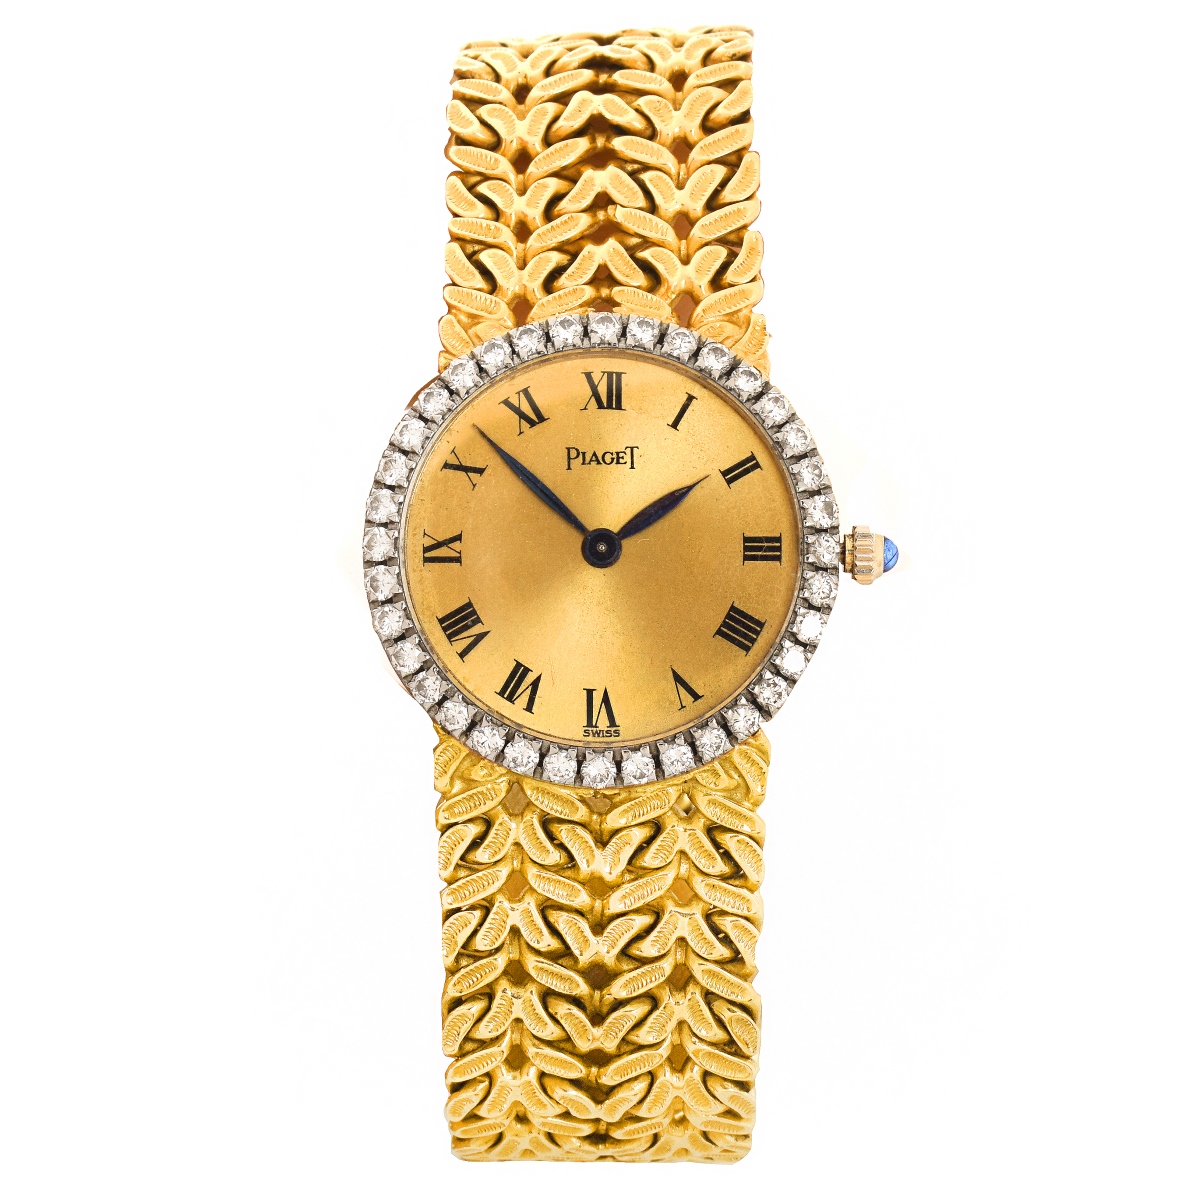 Vintage Piaget 18K Watch